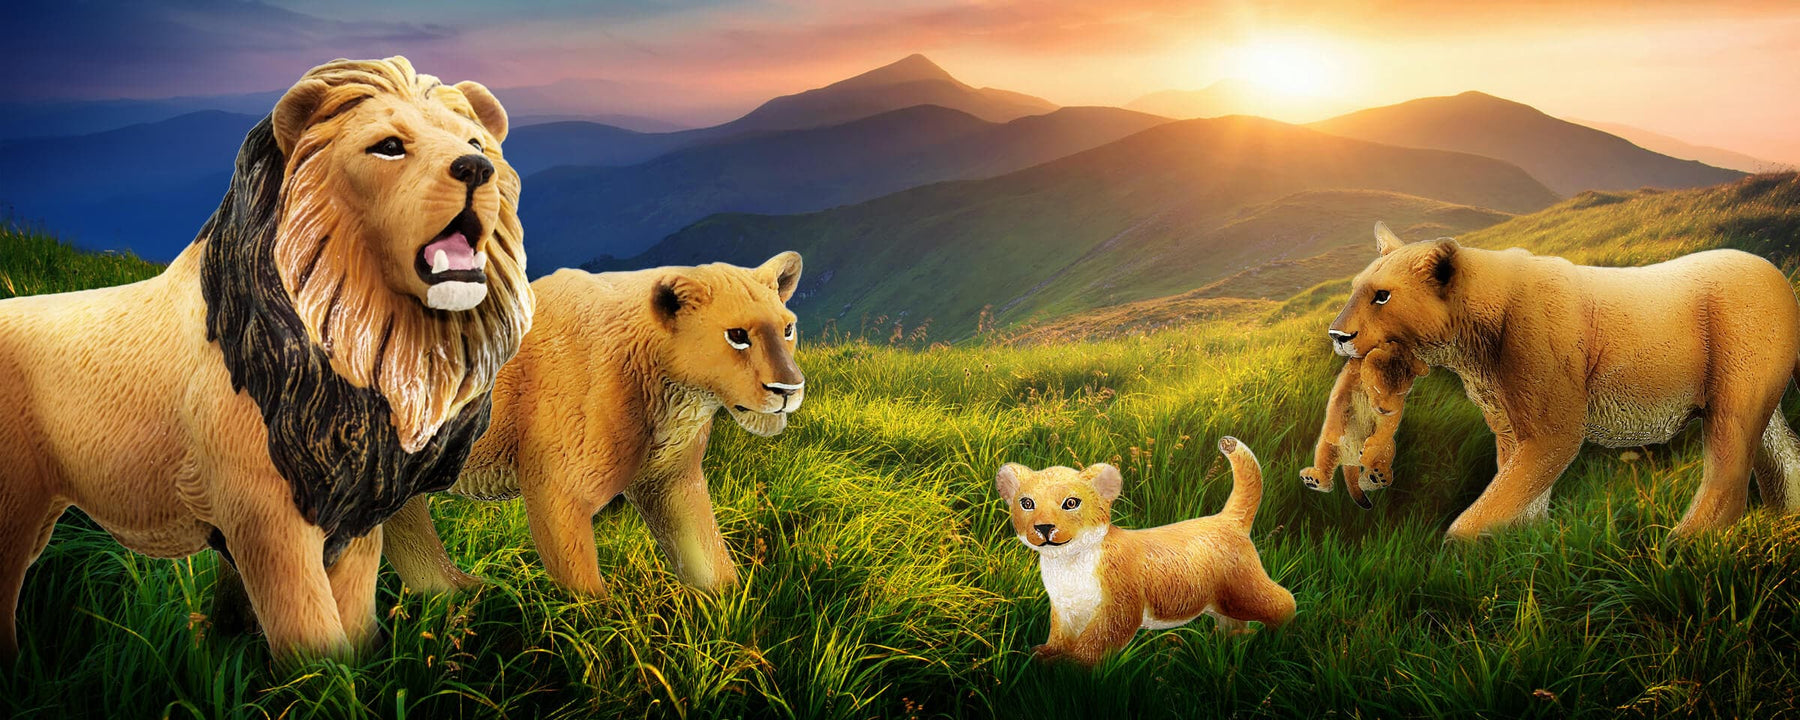 ROAR! It's World Lion Day! - Safari Ltd®